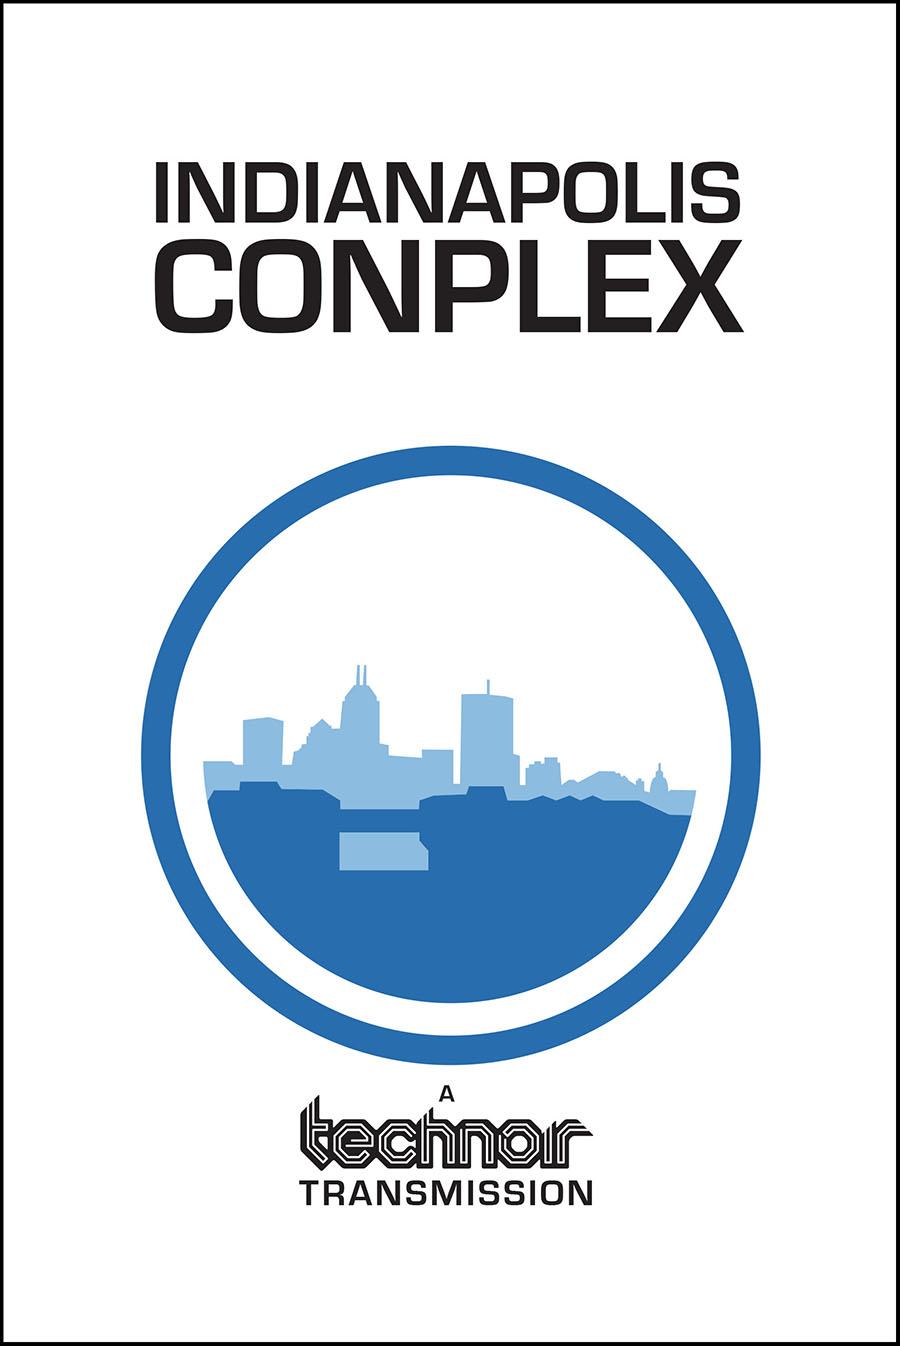 Technoir - Indianapolis Conplex